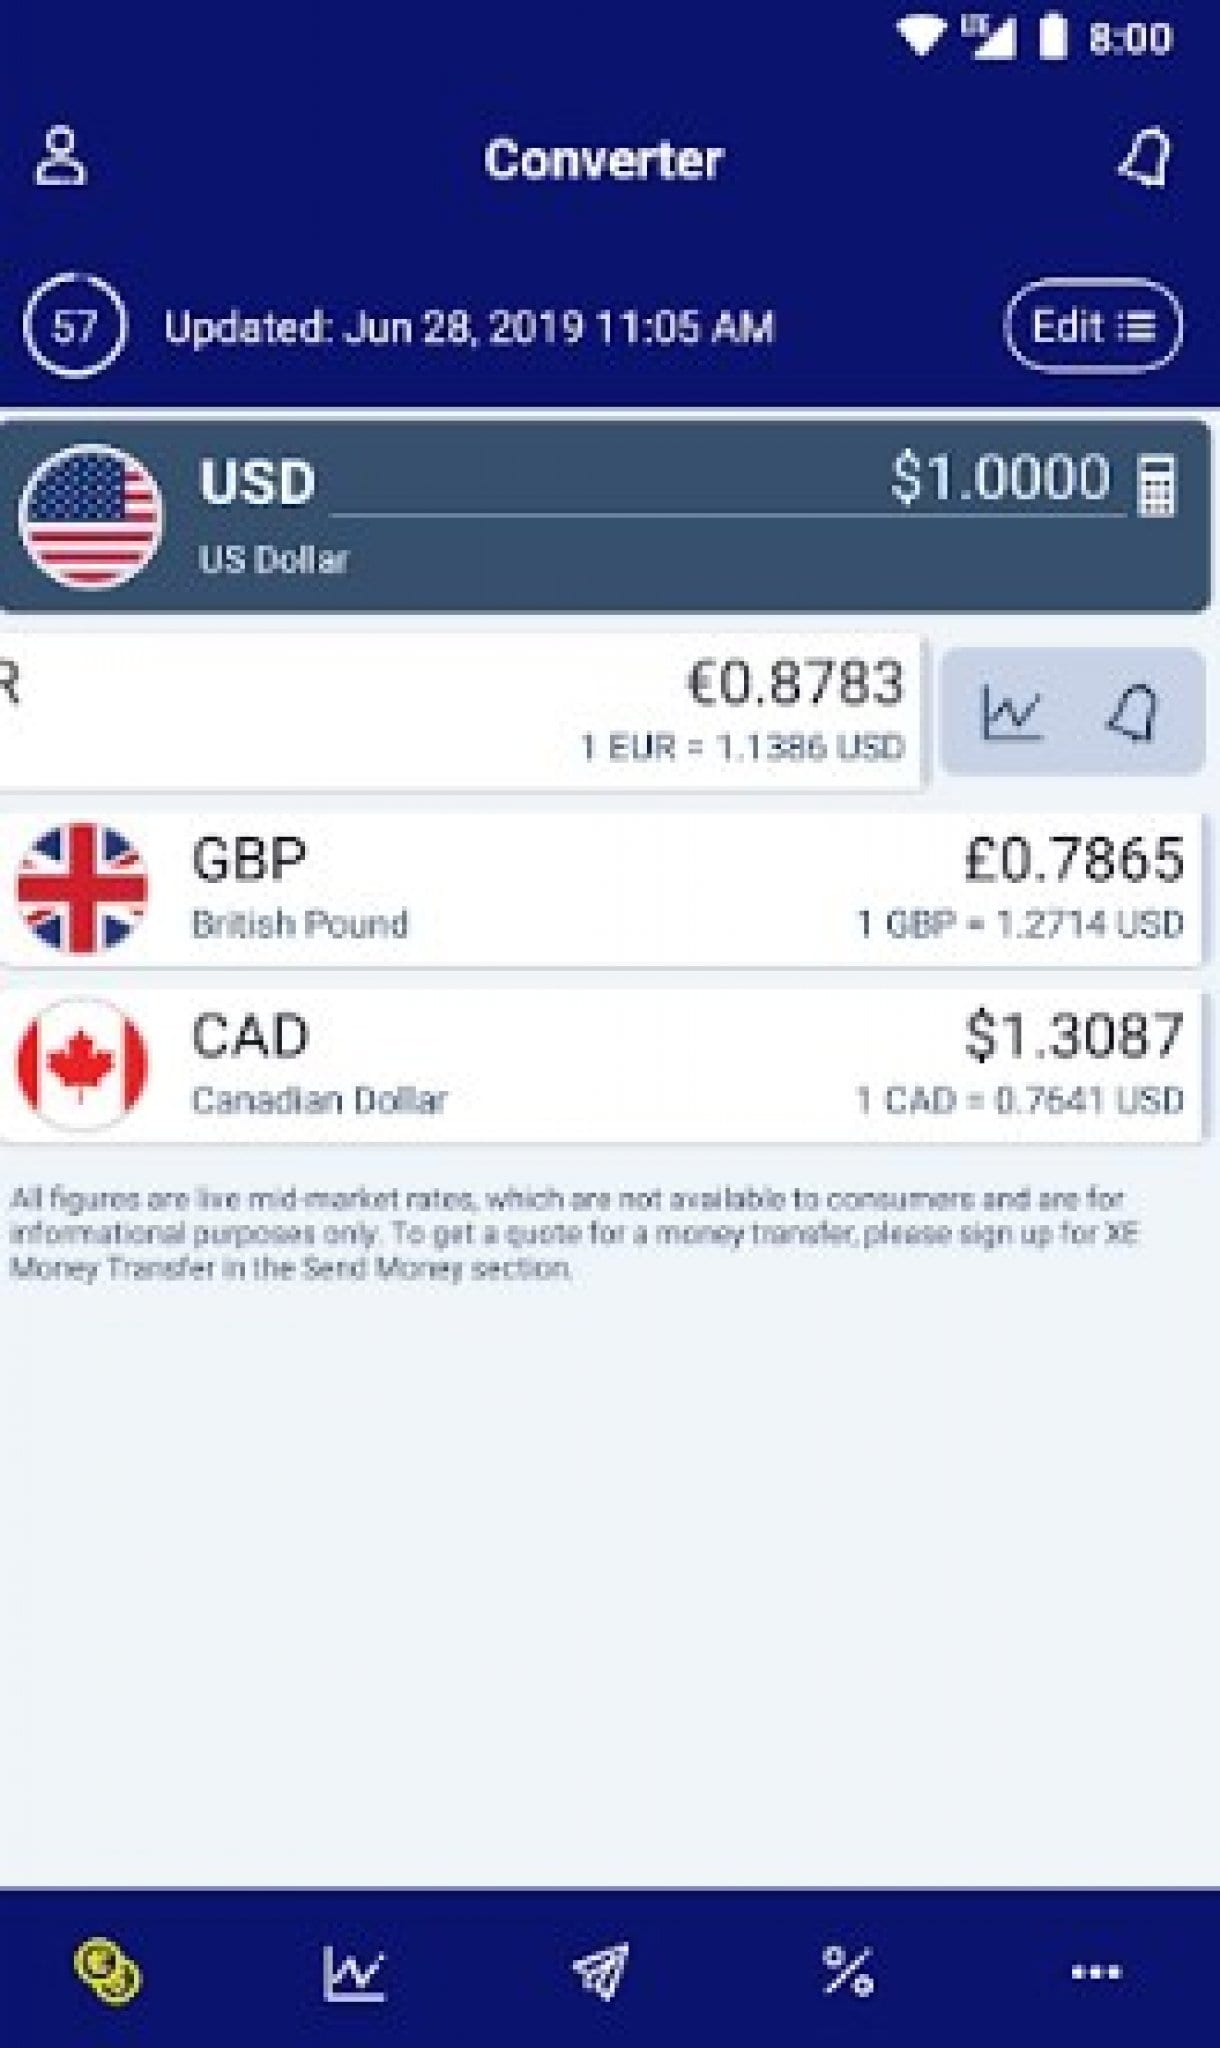 best currency converter app 2018